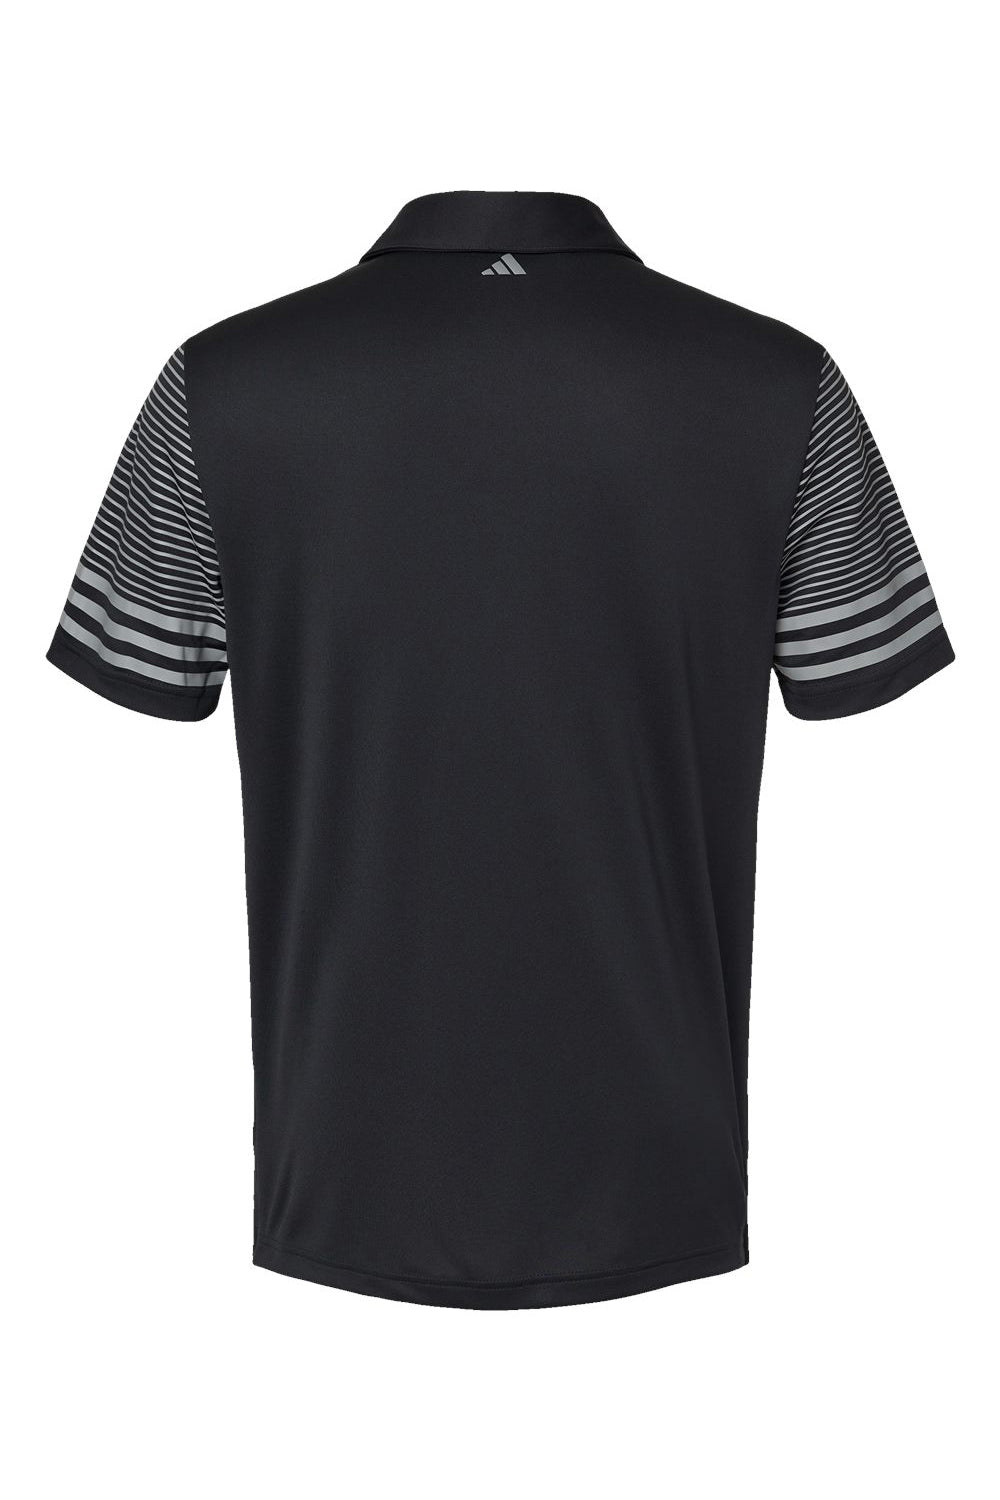 Adidas A490 Mens Striped Short Sleeve Polo Shirt Black/Grey Flat Back